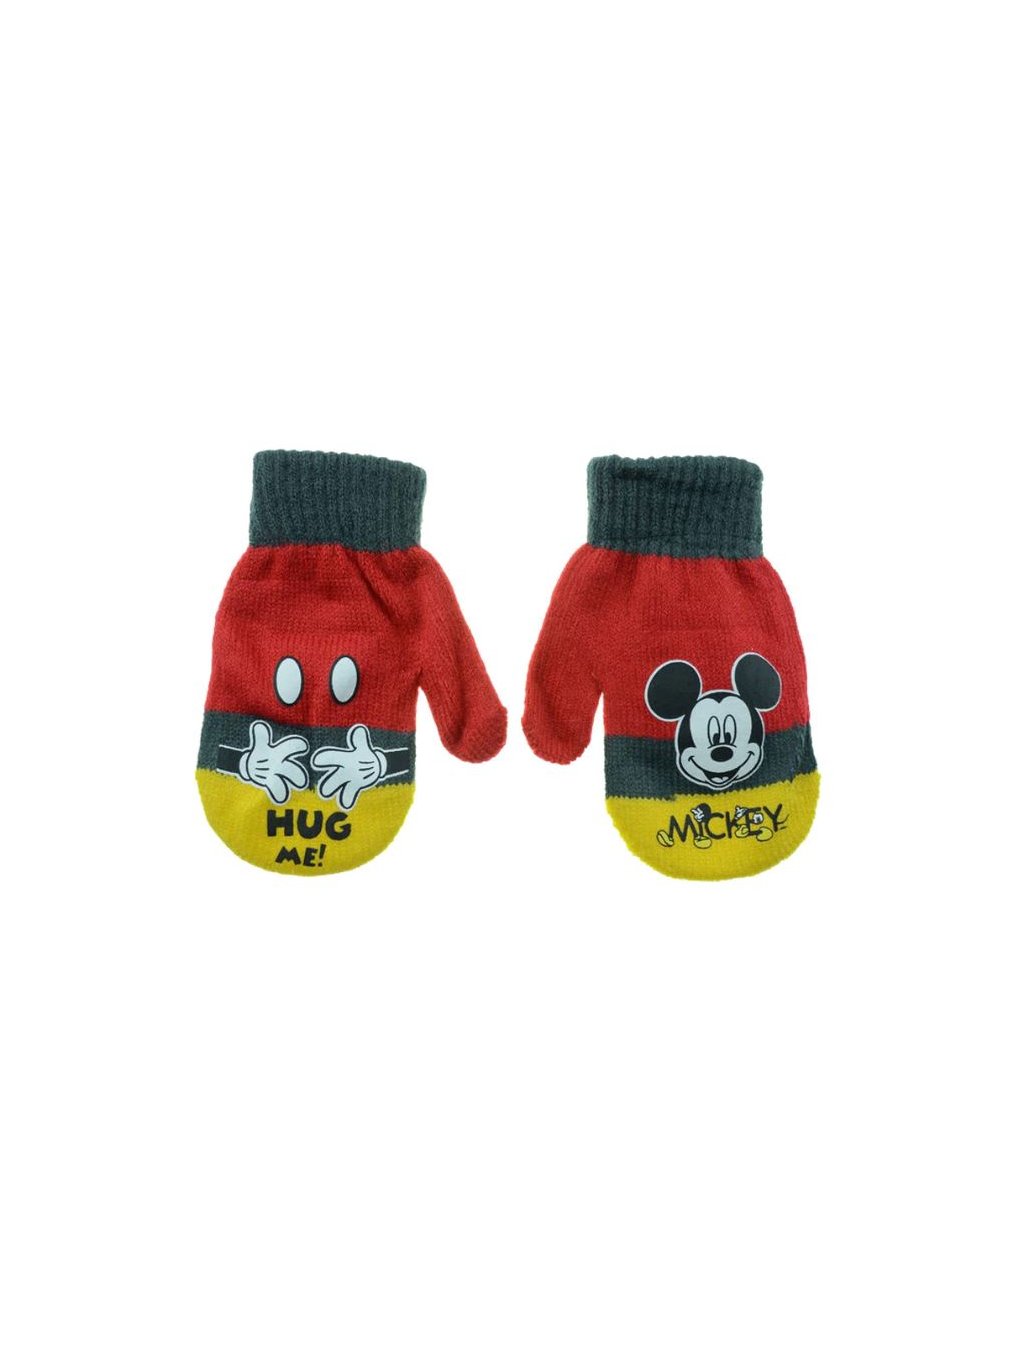 Rukavice B-4176 Mickey mouse pro 1-4 roky